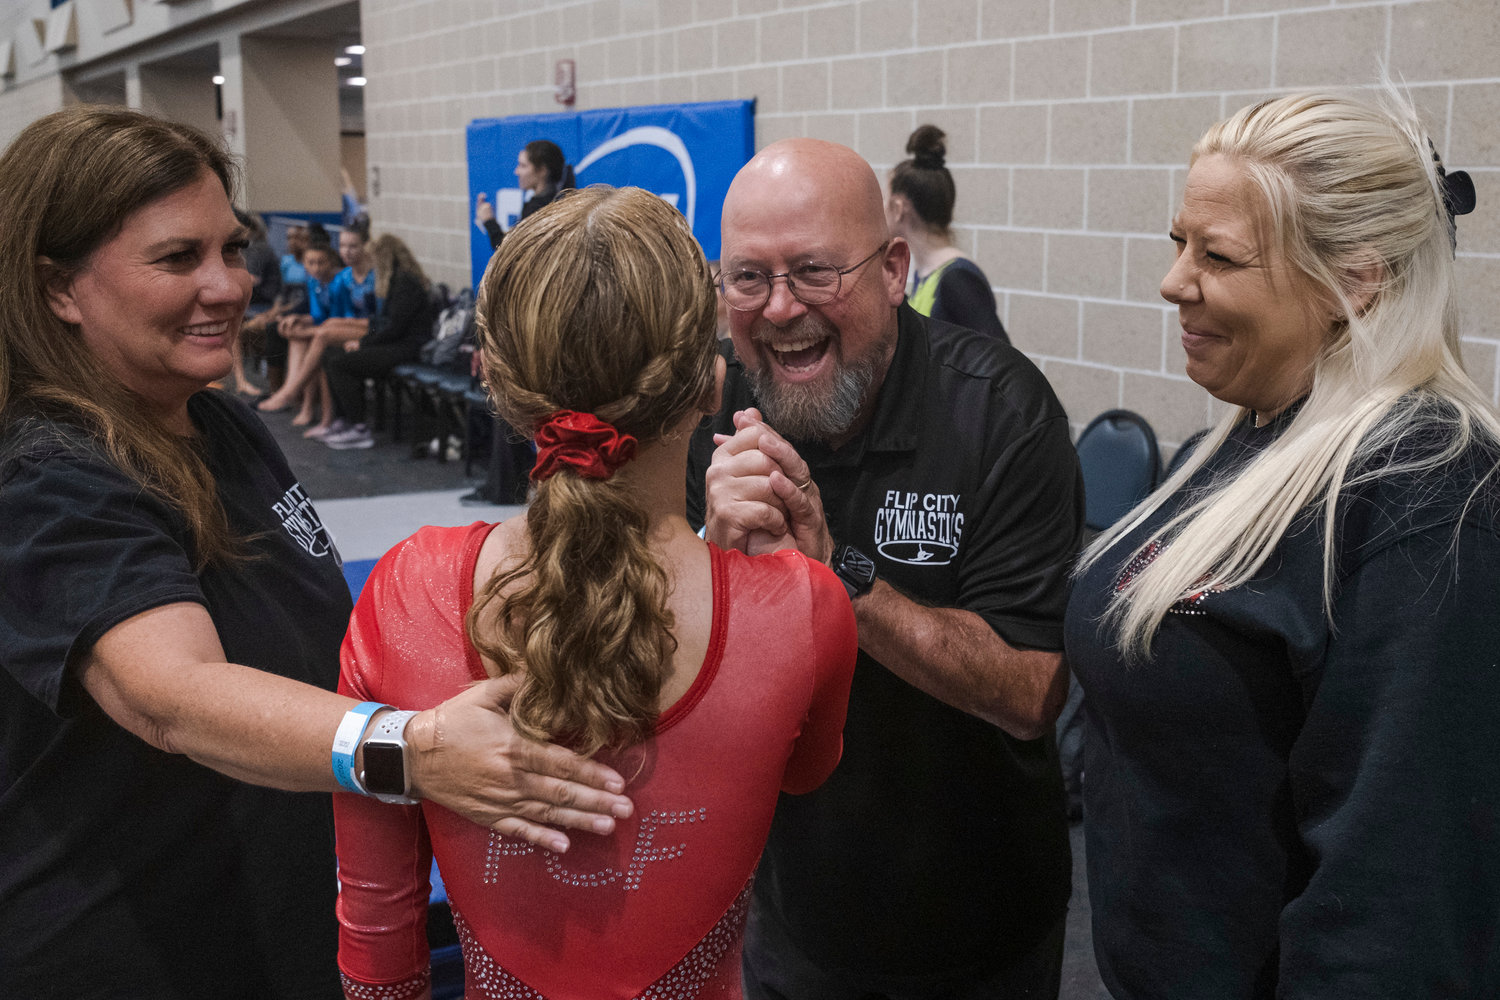 Flip City Academy gymnasts Saoirse McDaniel, 14, of Daphne celebrates with her coaches.